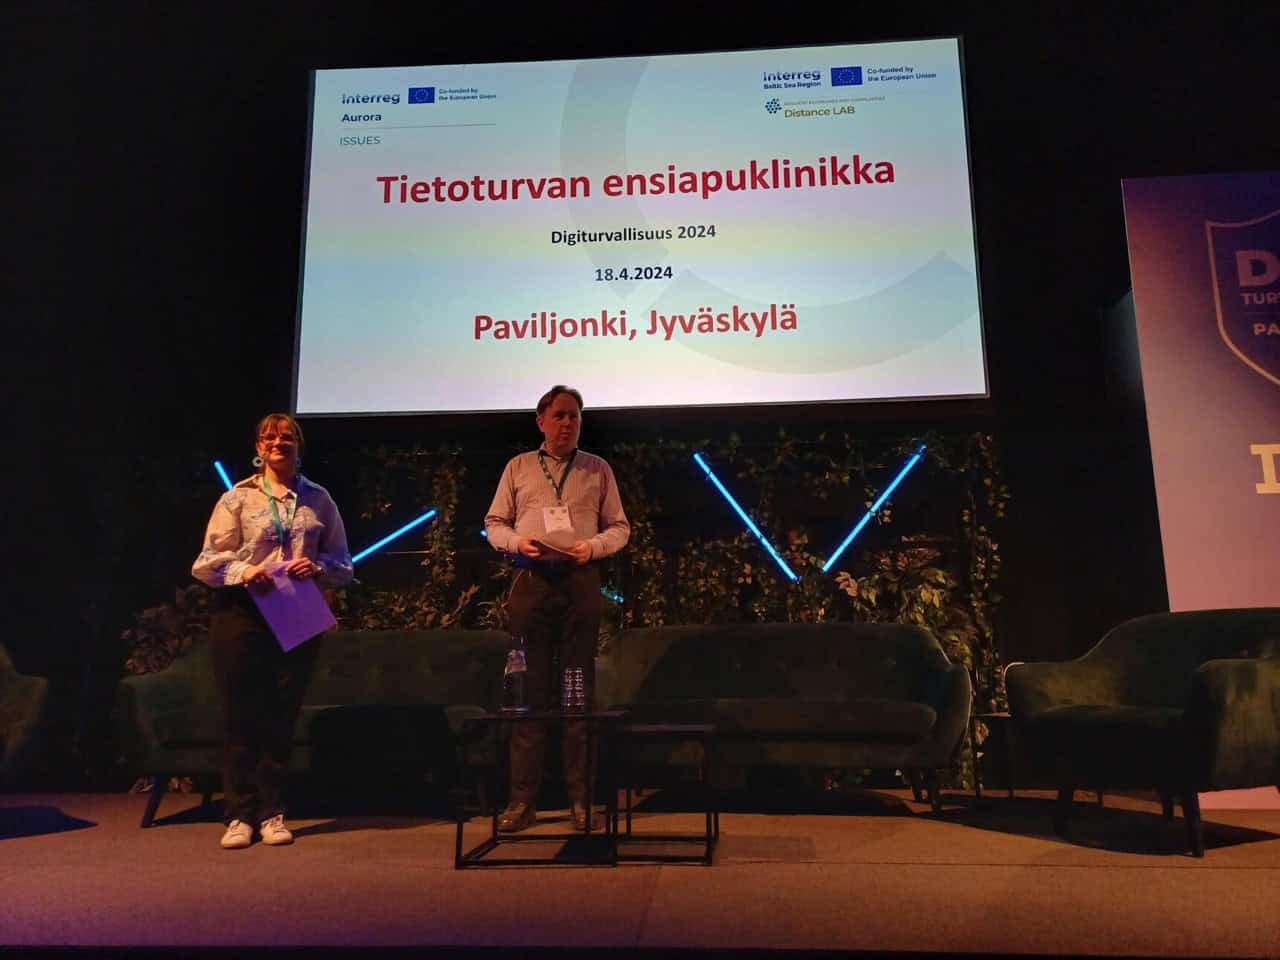 Laura Palovuori and Tom Tuunainen giving a presentation